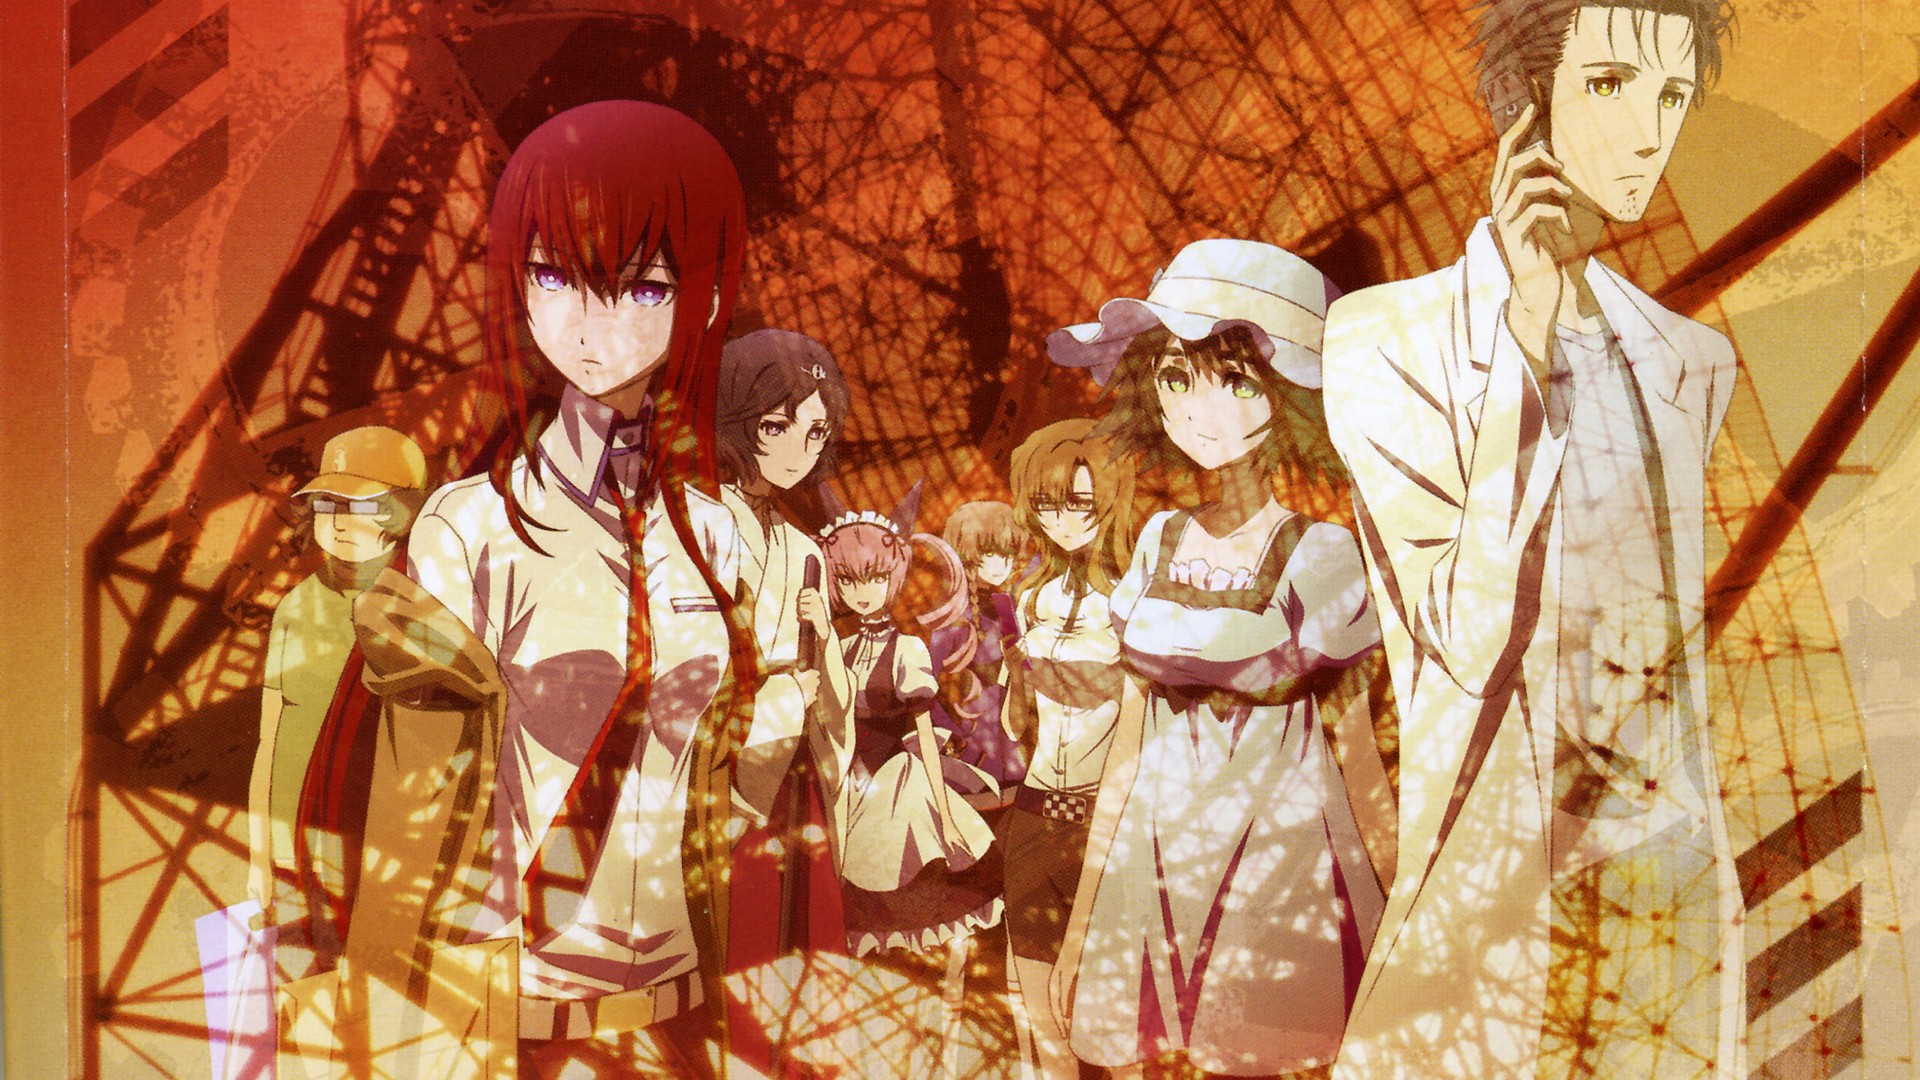 Anime 1920x1080 Steins;Gate anime time travel anime girls redhead tie anime boys group of women